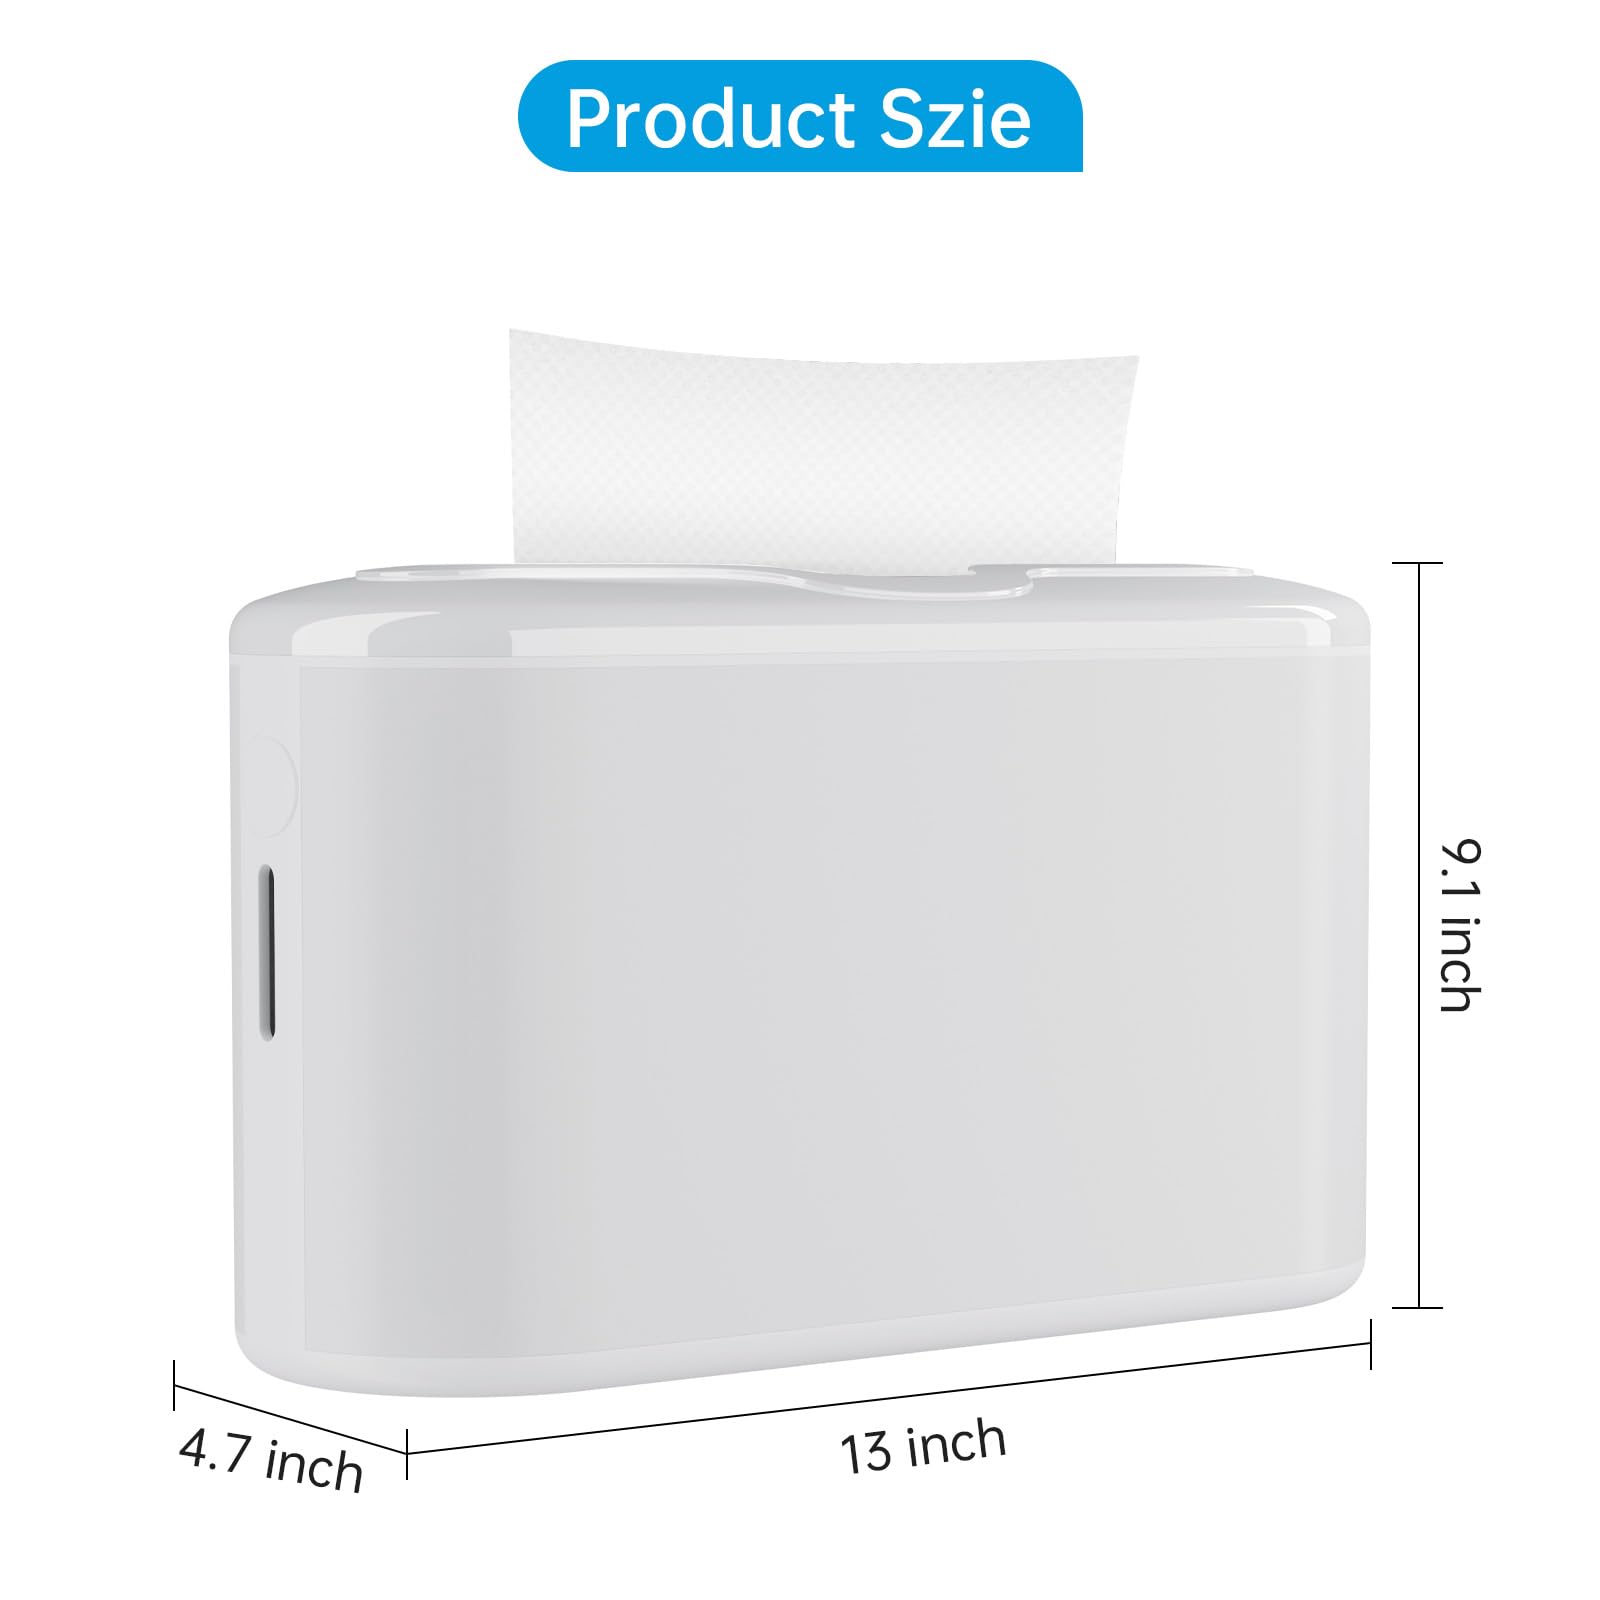 Xlxker Paper Towel Dispenser Countertop, Multifold Hand Towel Dispenser for Bedroom, Bathroom, Kitchen, Toilet (White)